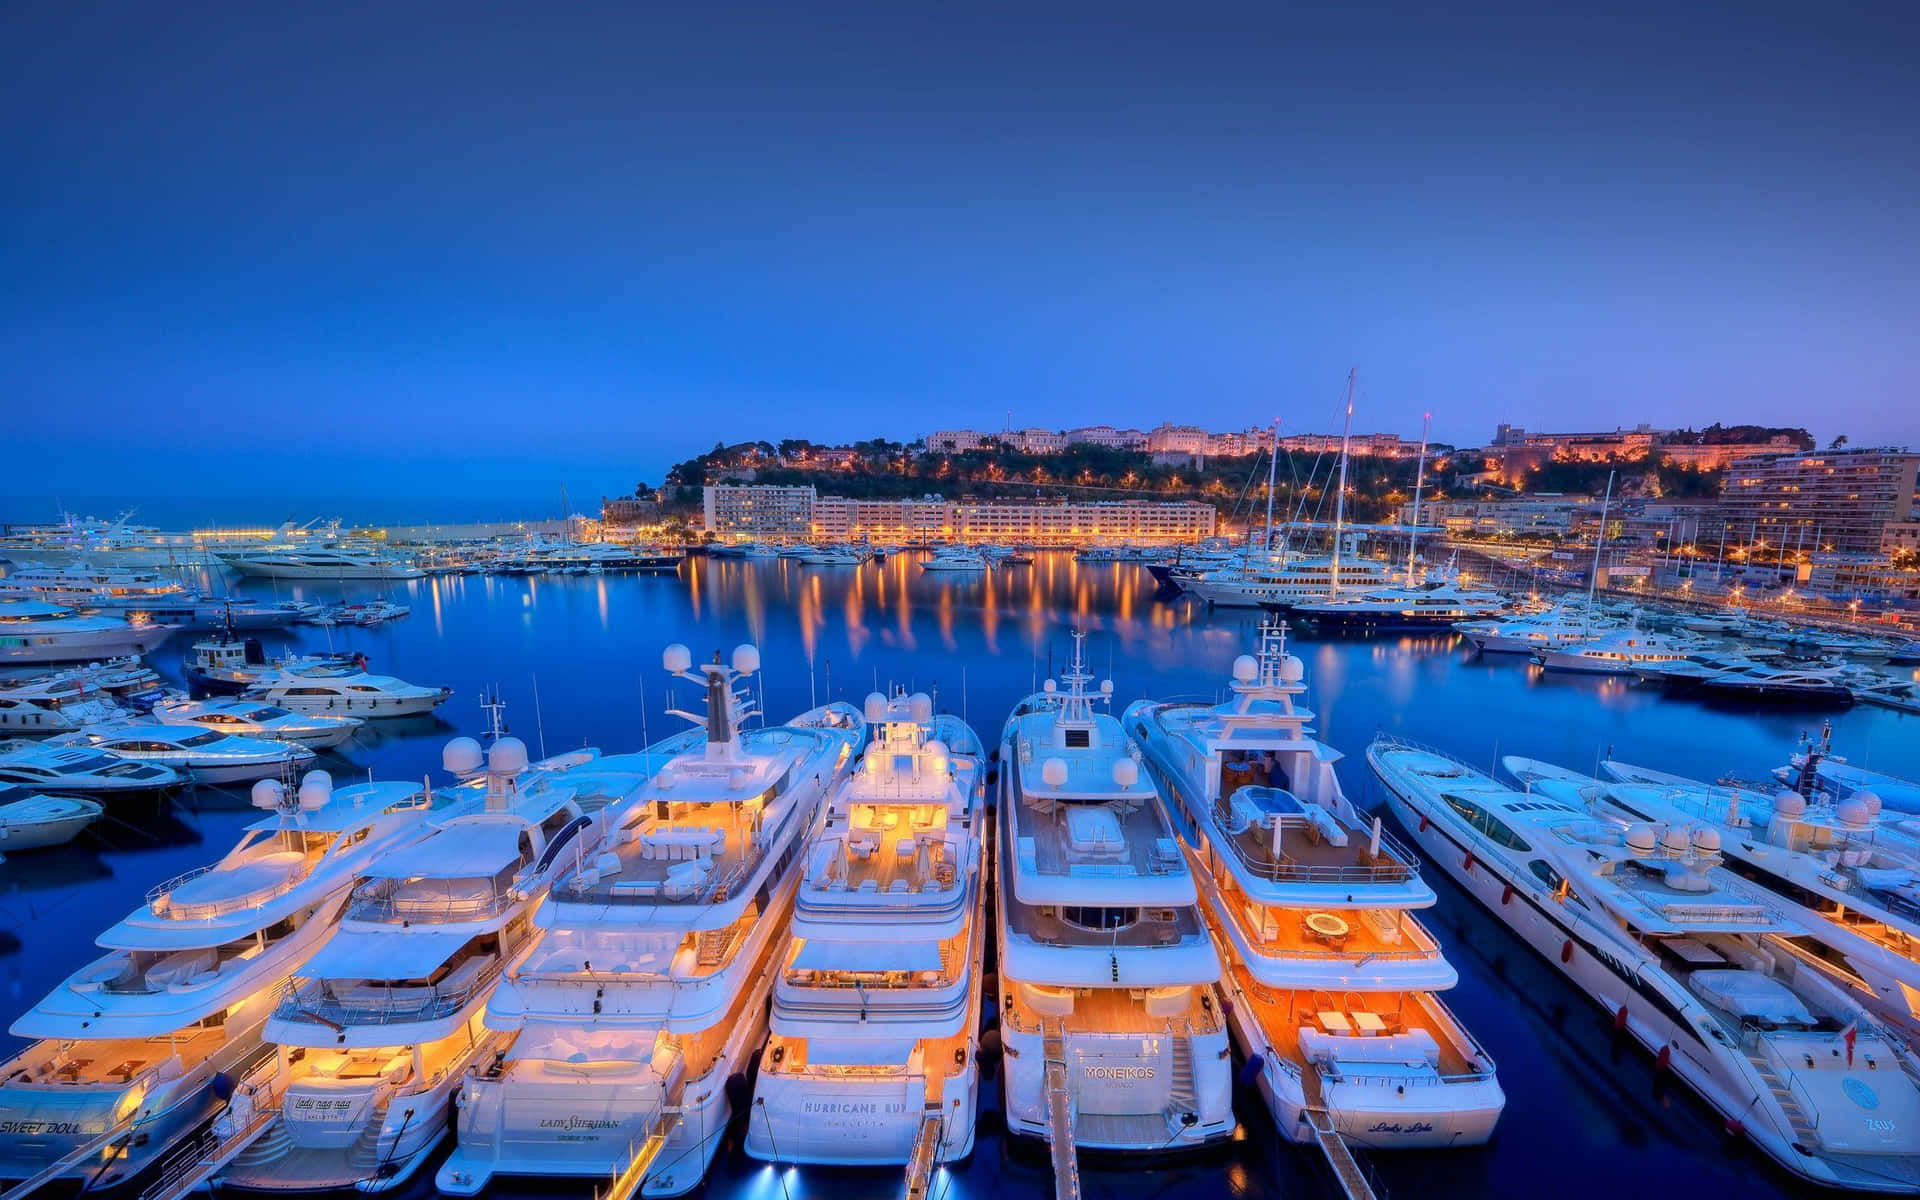 Luxury Yacht in the Mediterranean Sea